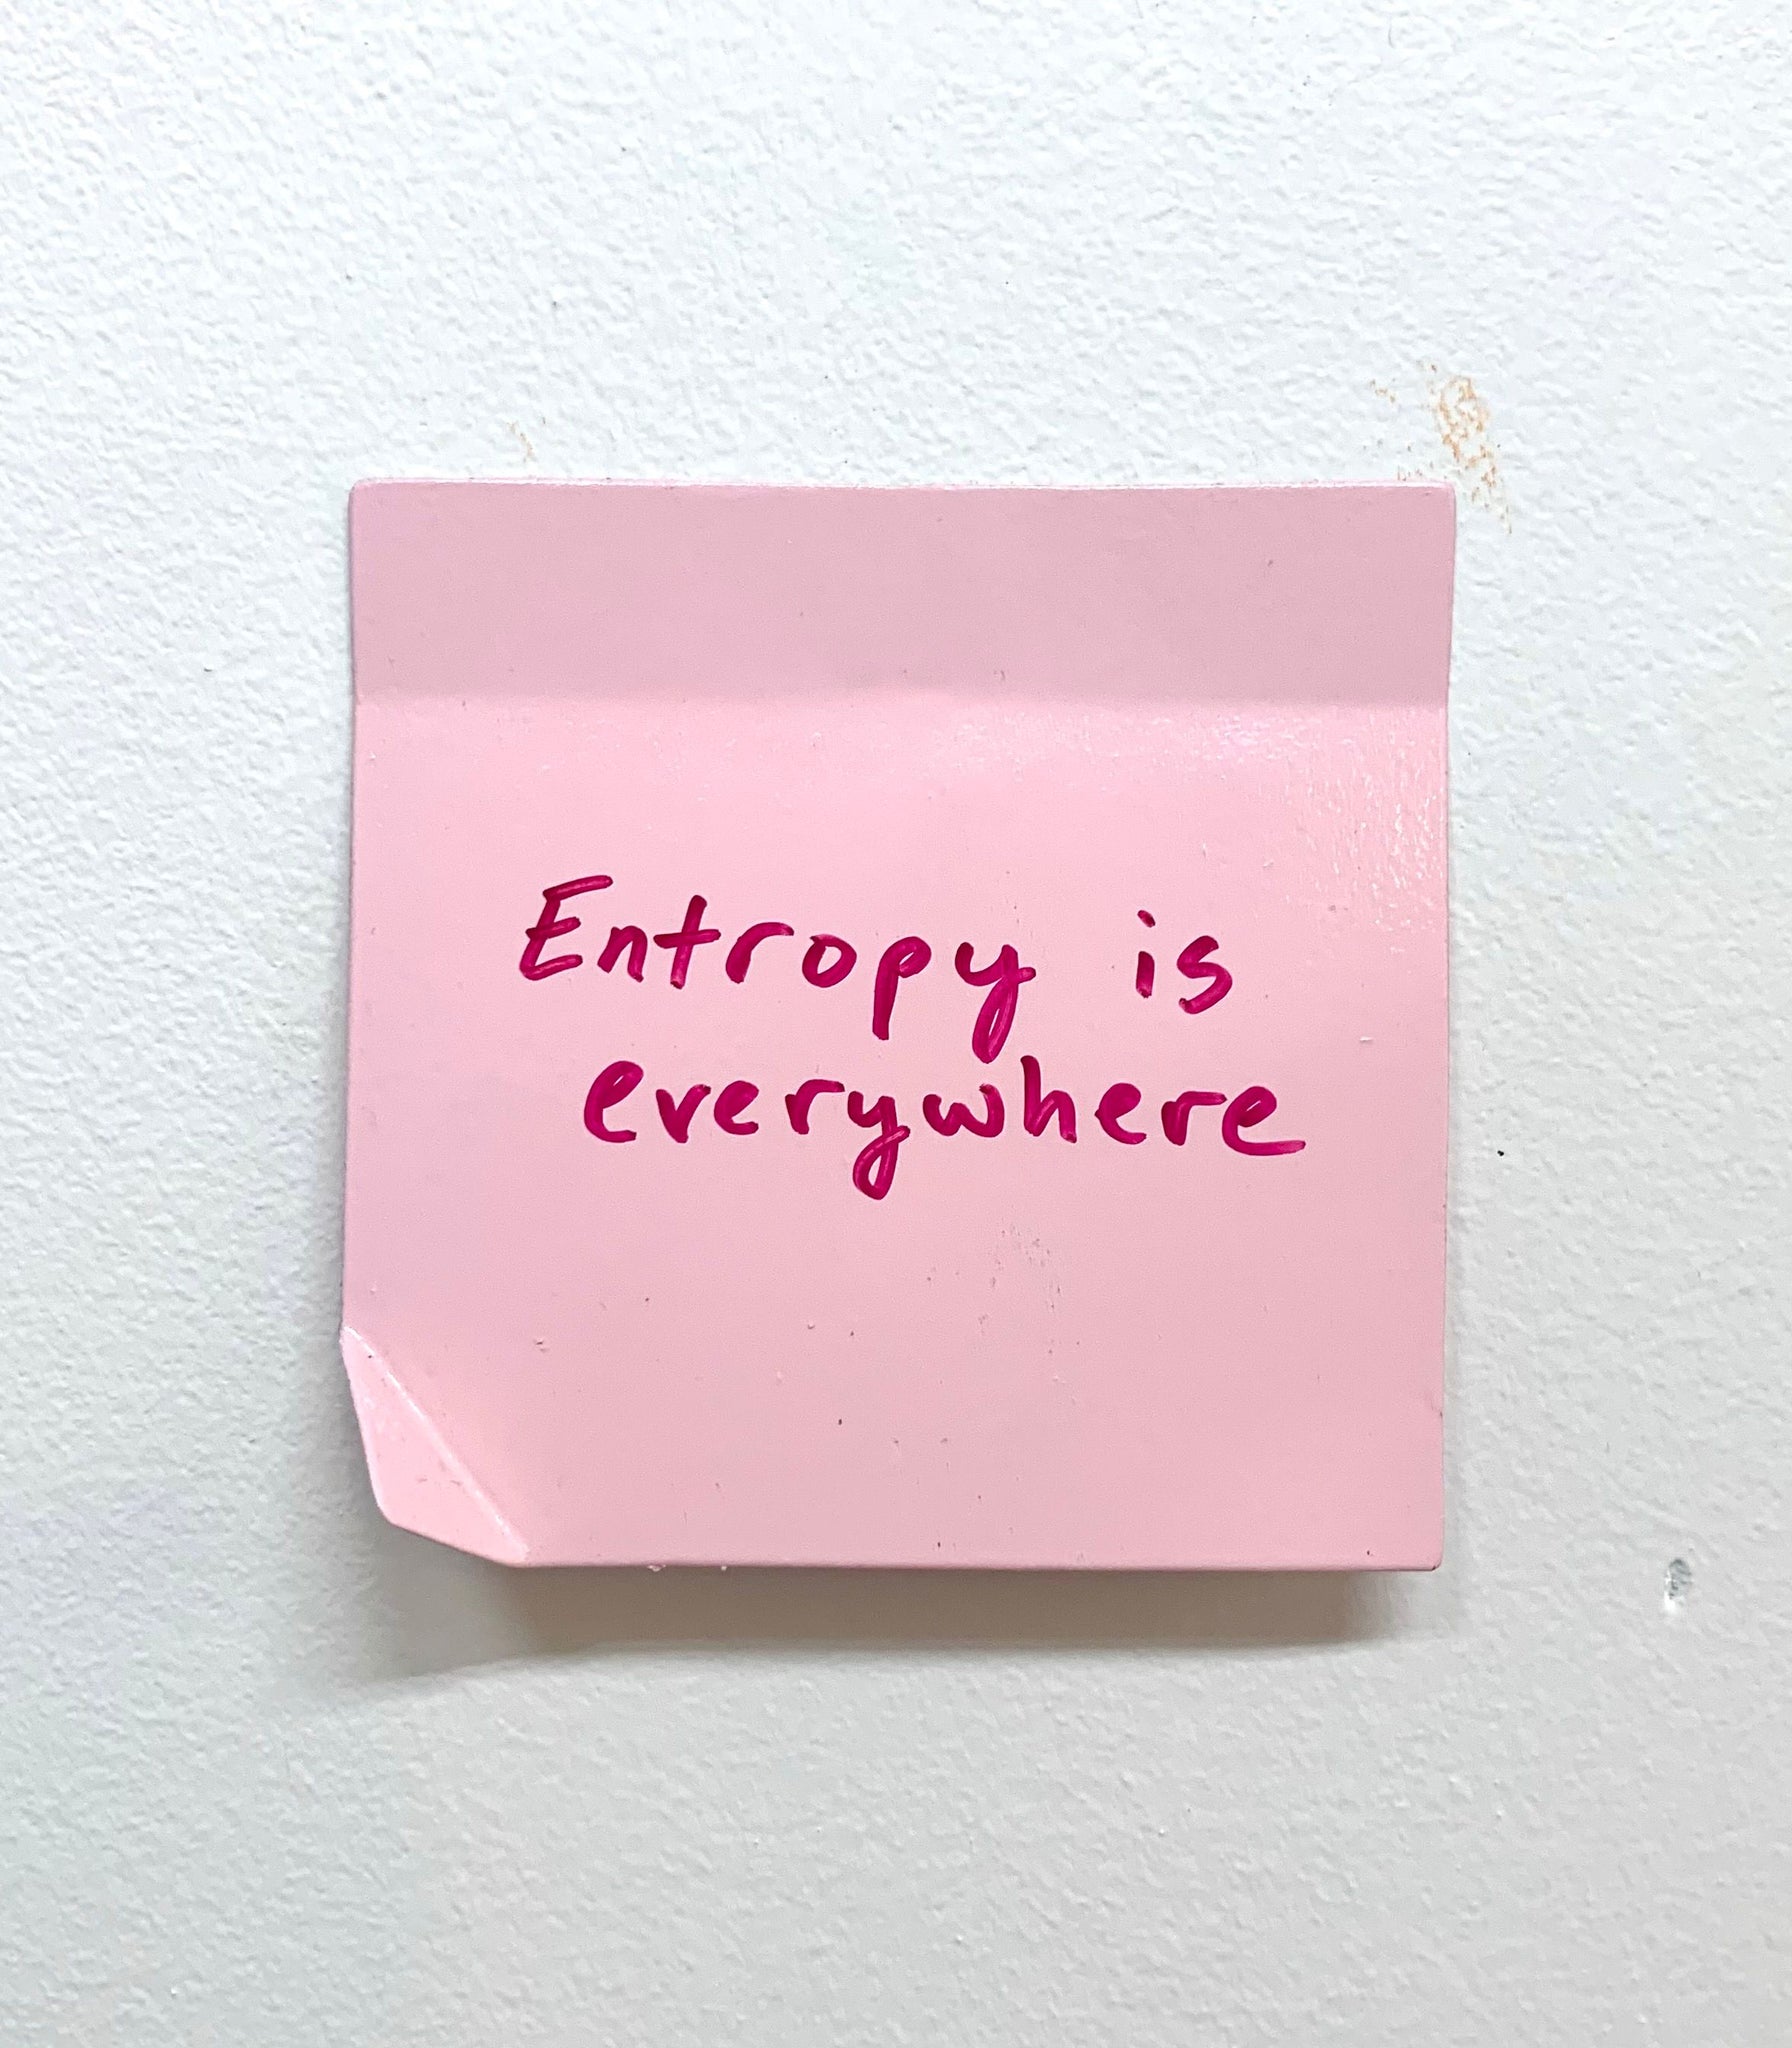 Stuart Lantry, "Entropy is everywhere"